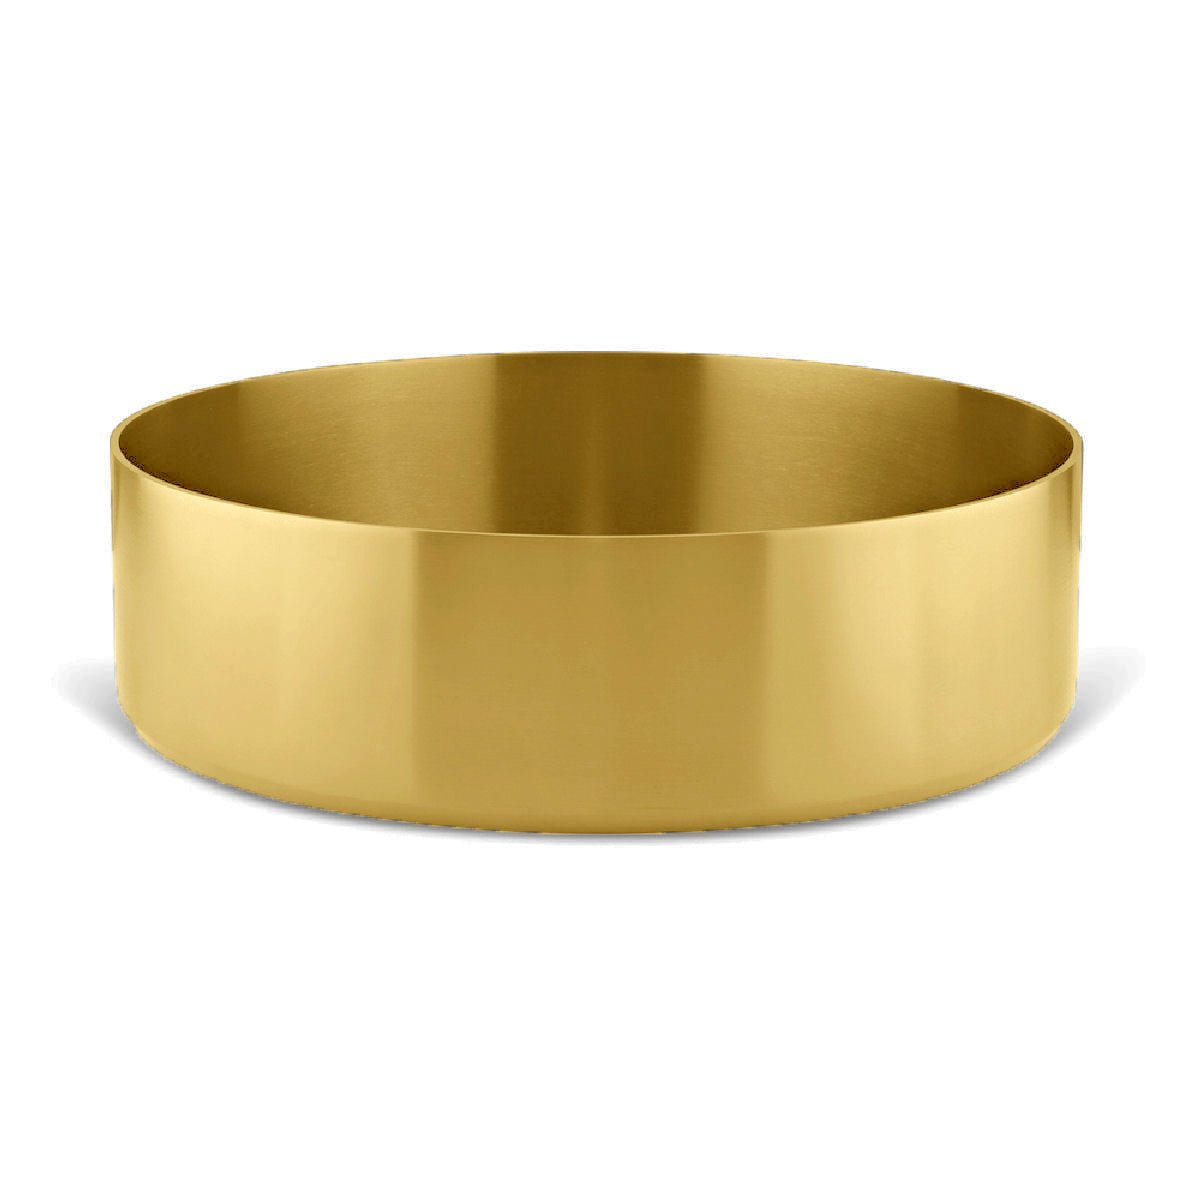 Luxury Champagne Gold Bathroom Stainless Steel Sink - |VESIMI Design| Luxury and Rustic bathrooms online